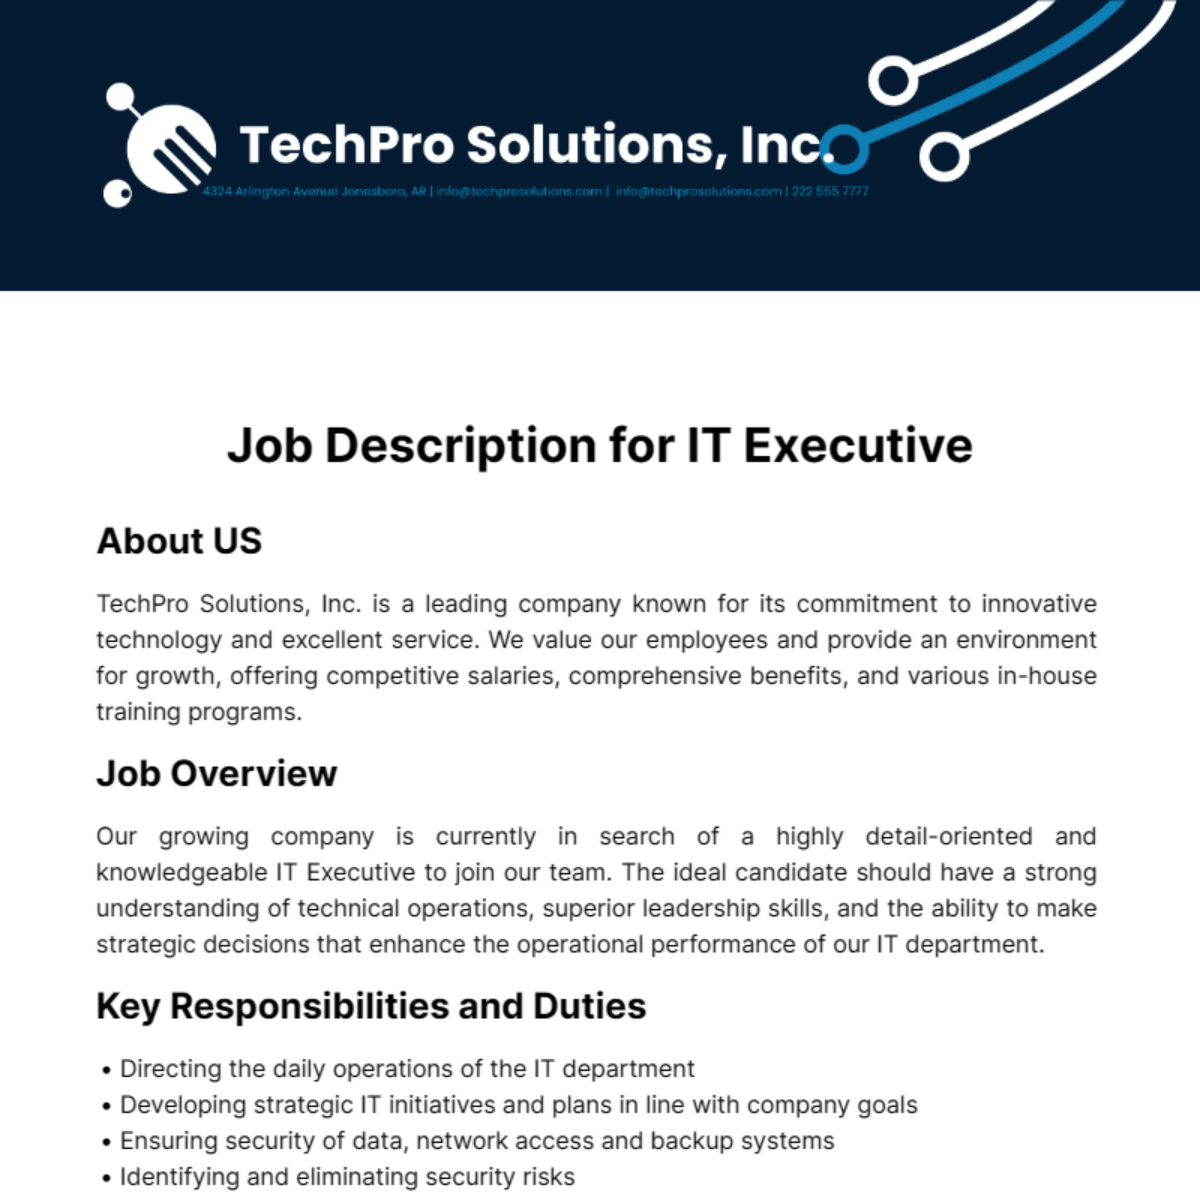 Job Description for IT Executive Template